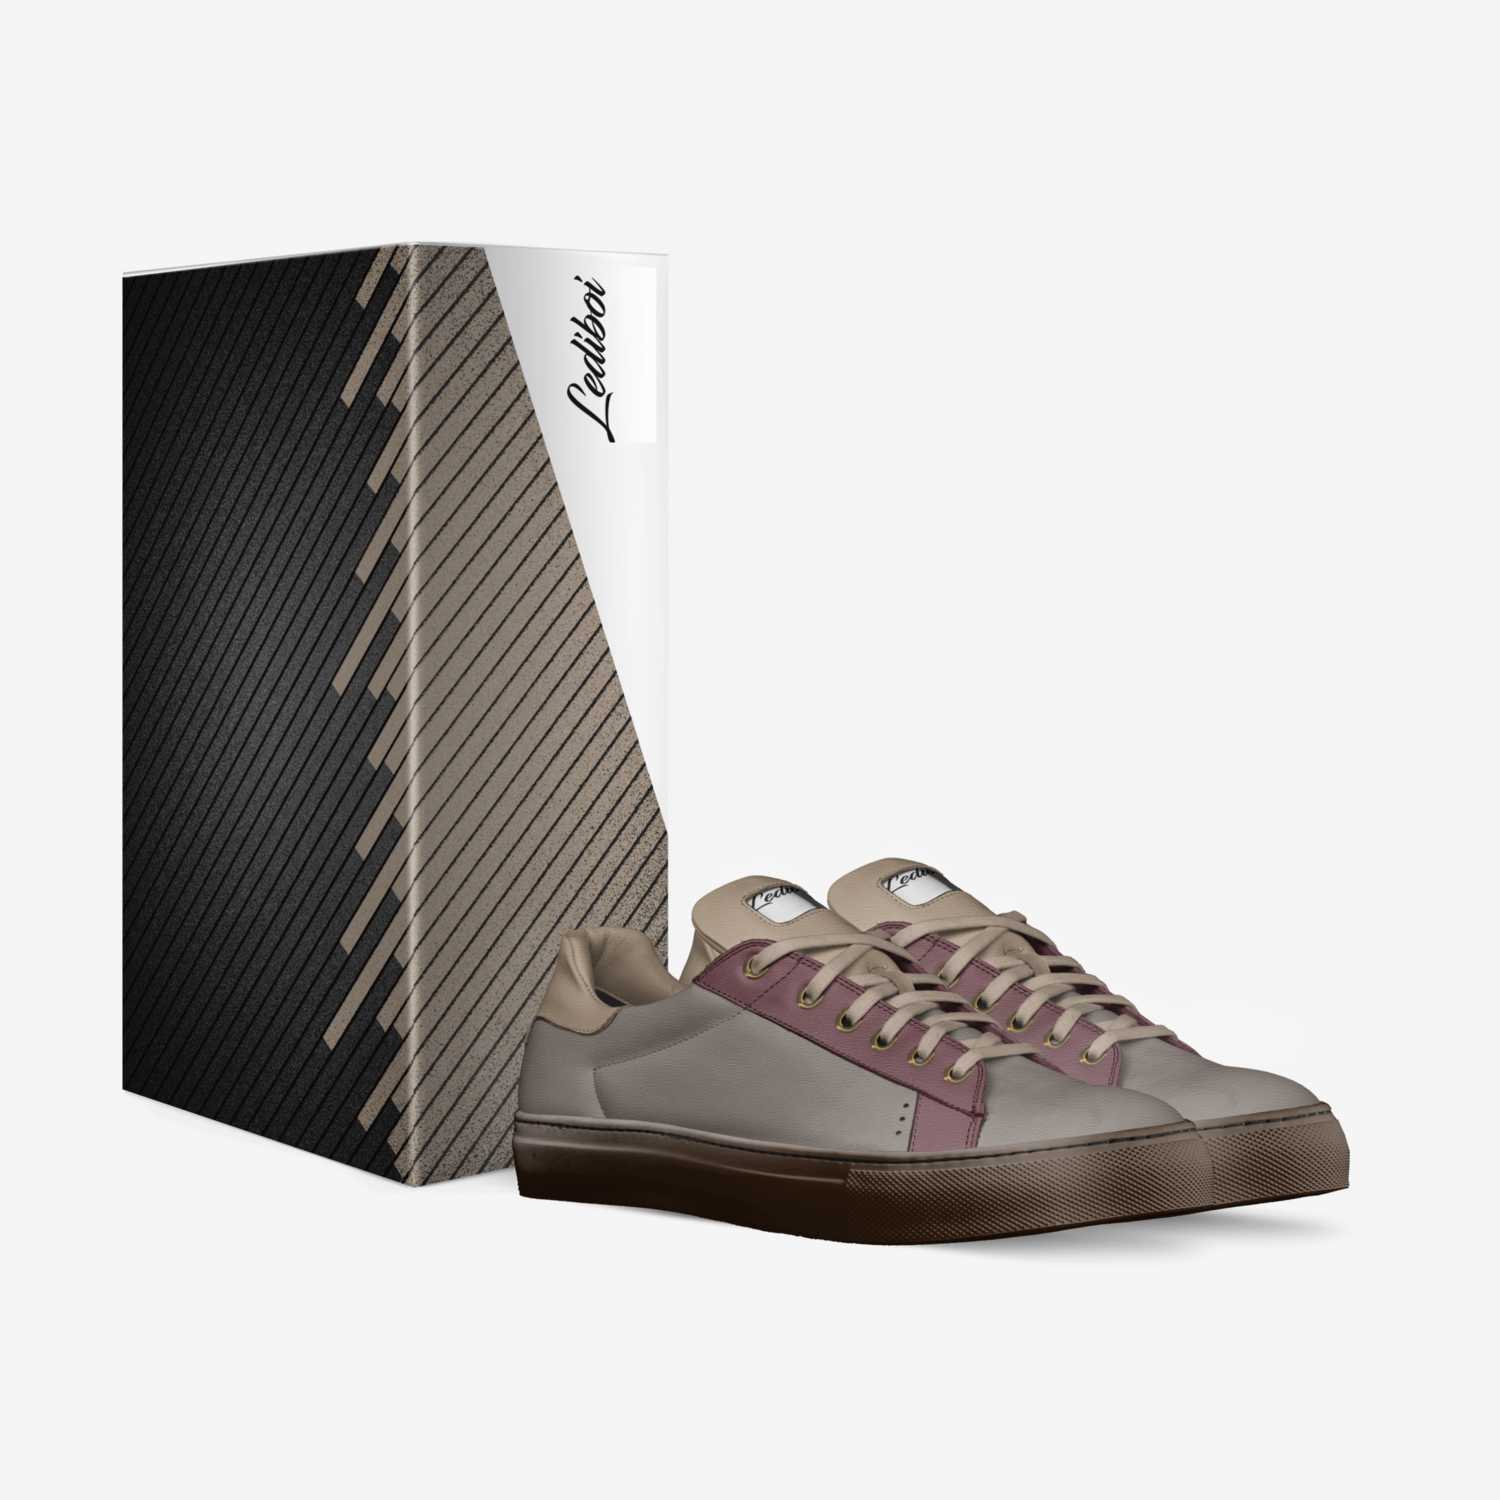 LEDiBOi custom made in Italy shoes by Zakonya Allen | Box view